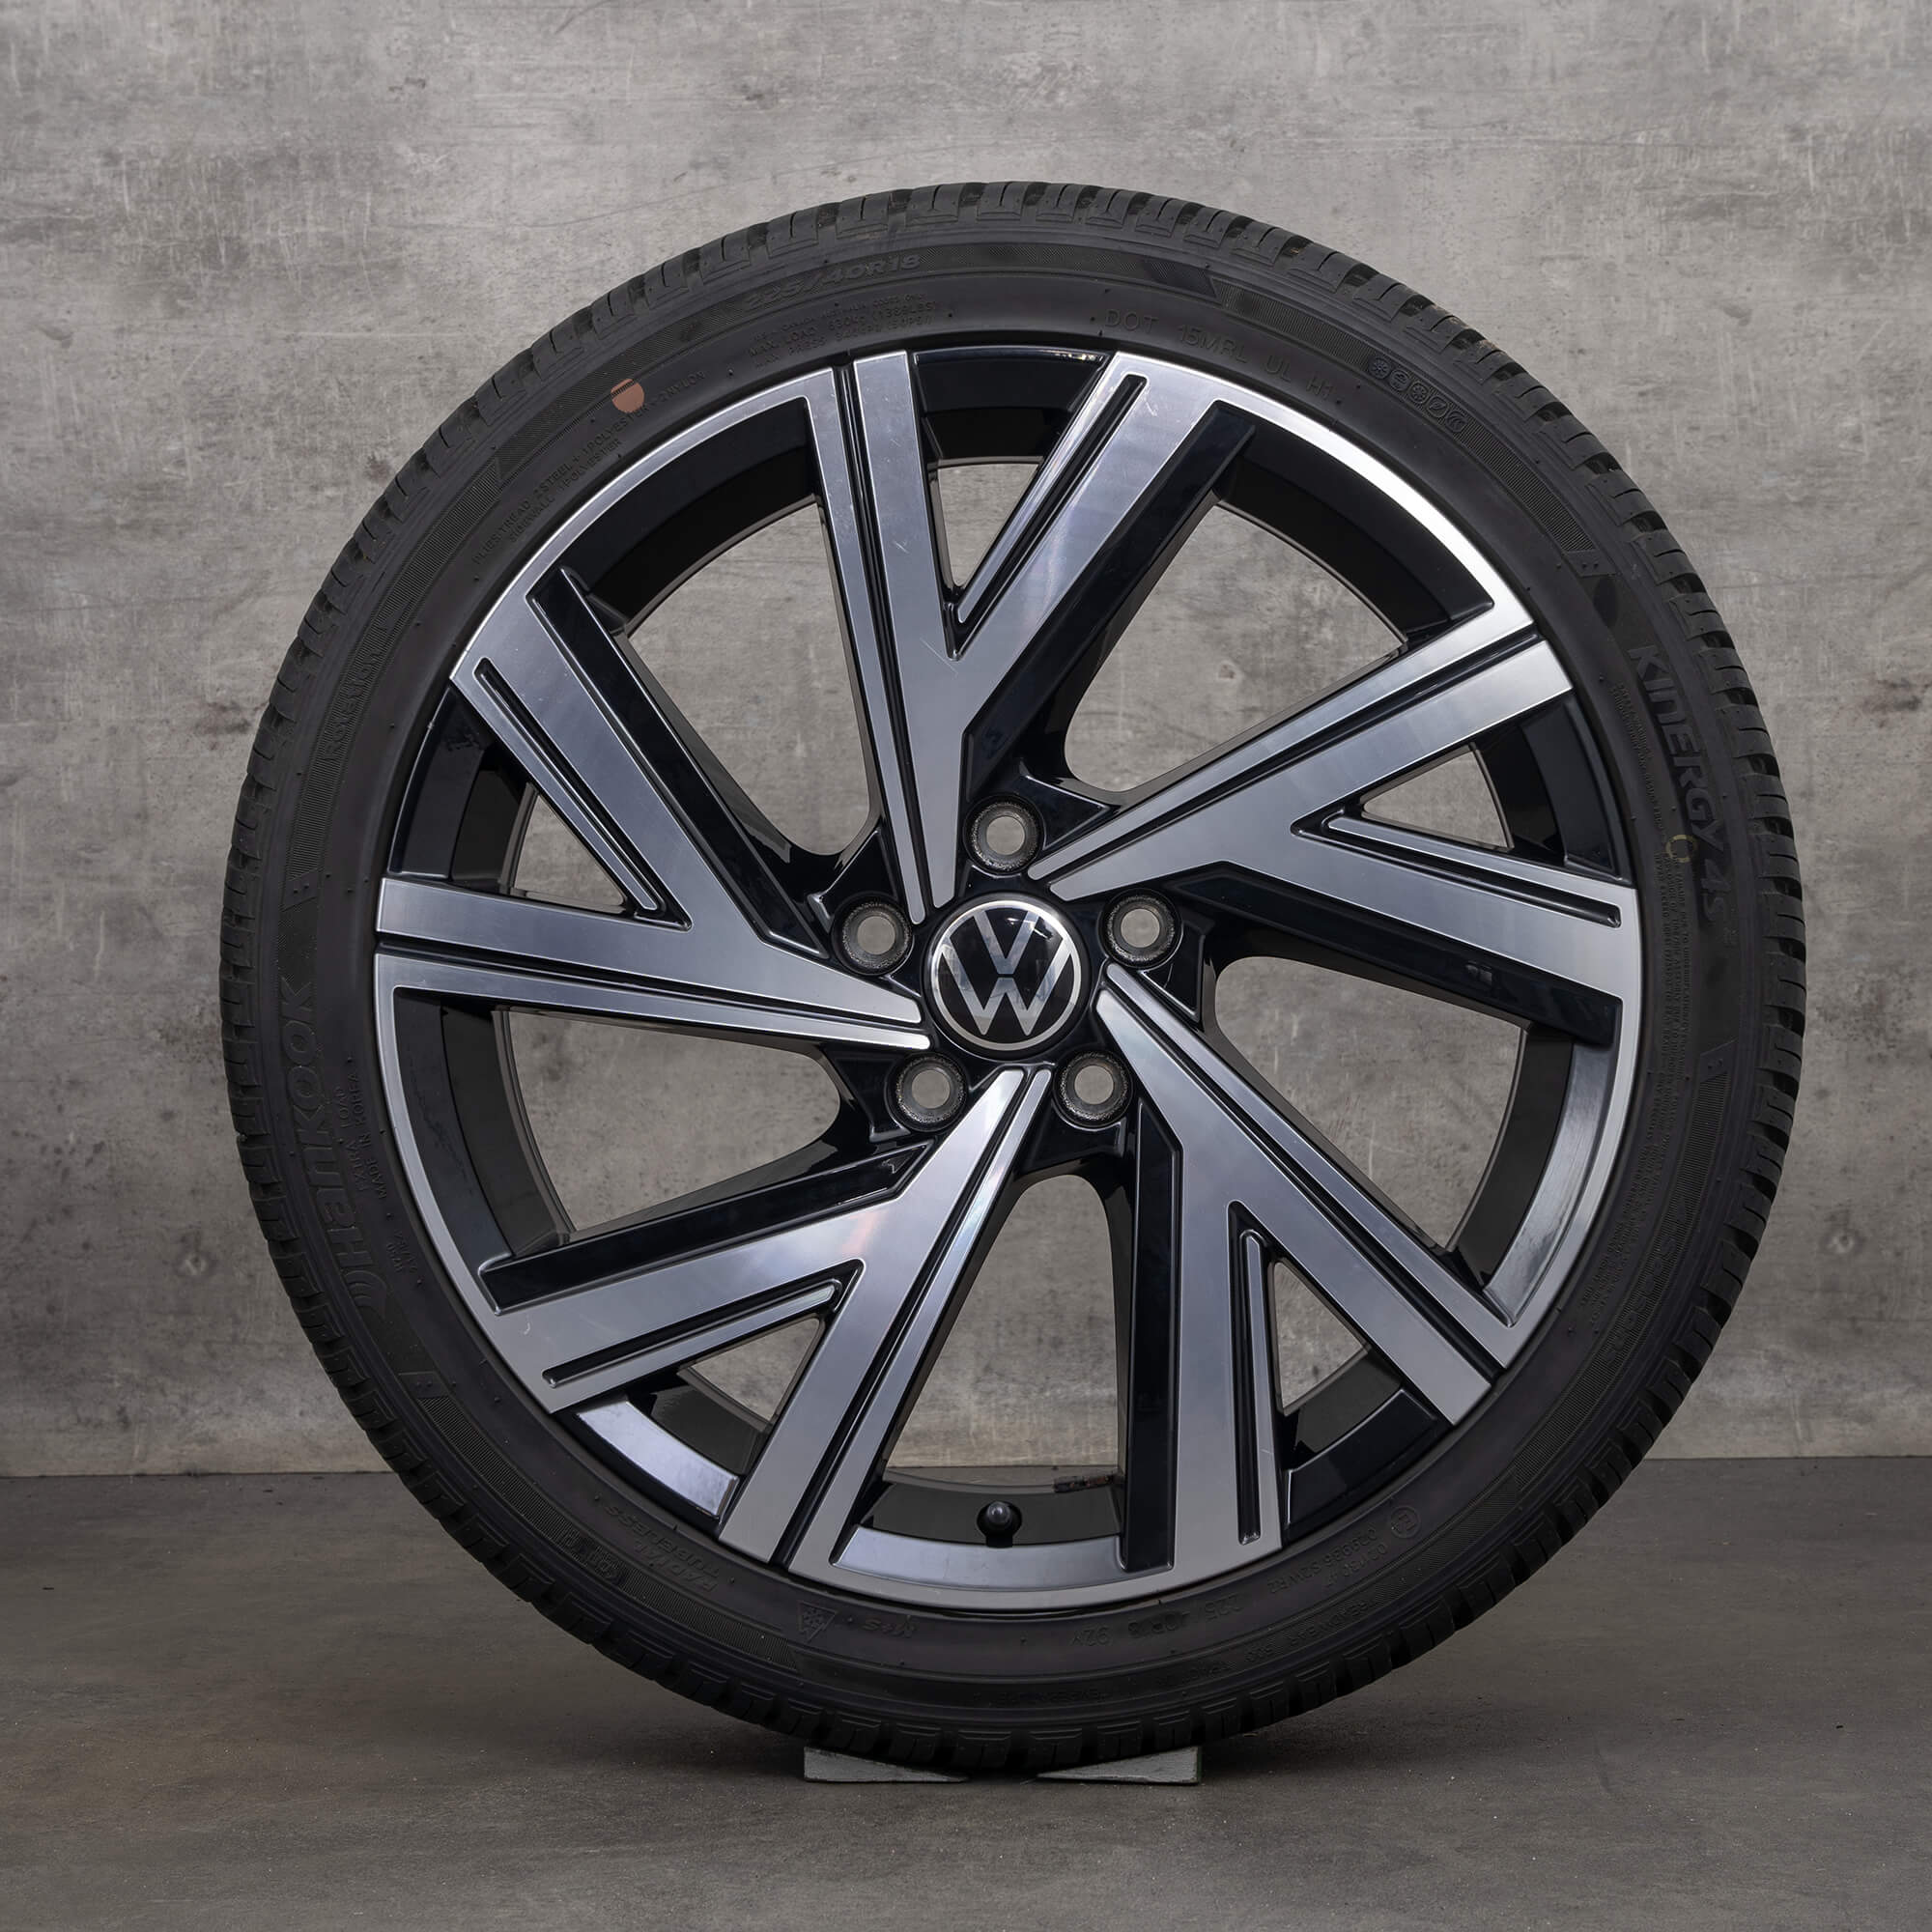 VW Golf 6 7 8 R ruote per tutte le stagioni pneumatici cerchi da 18 pollici